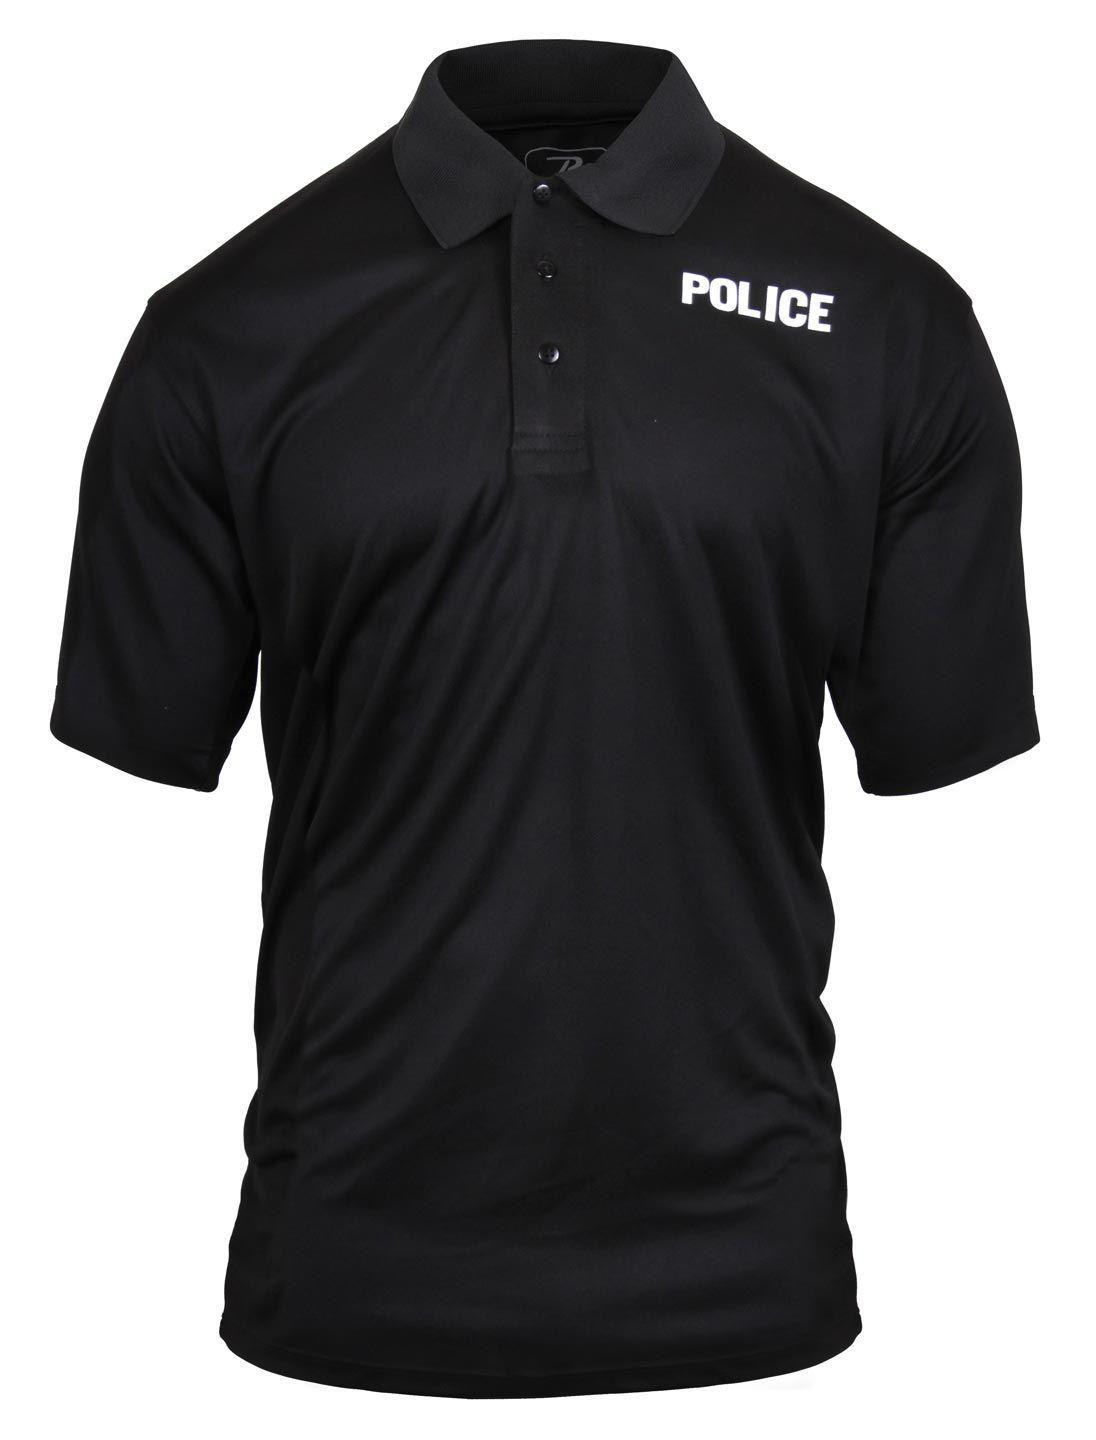 #3 - Rothco Svedtransporterende Polo T-shirt (Black / Police, L)